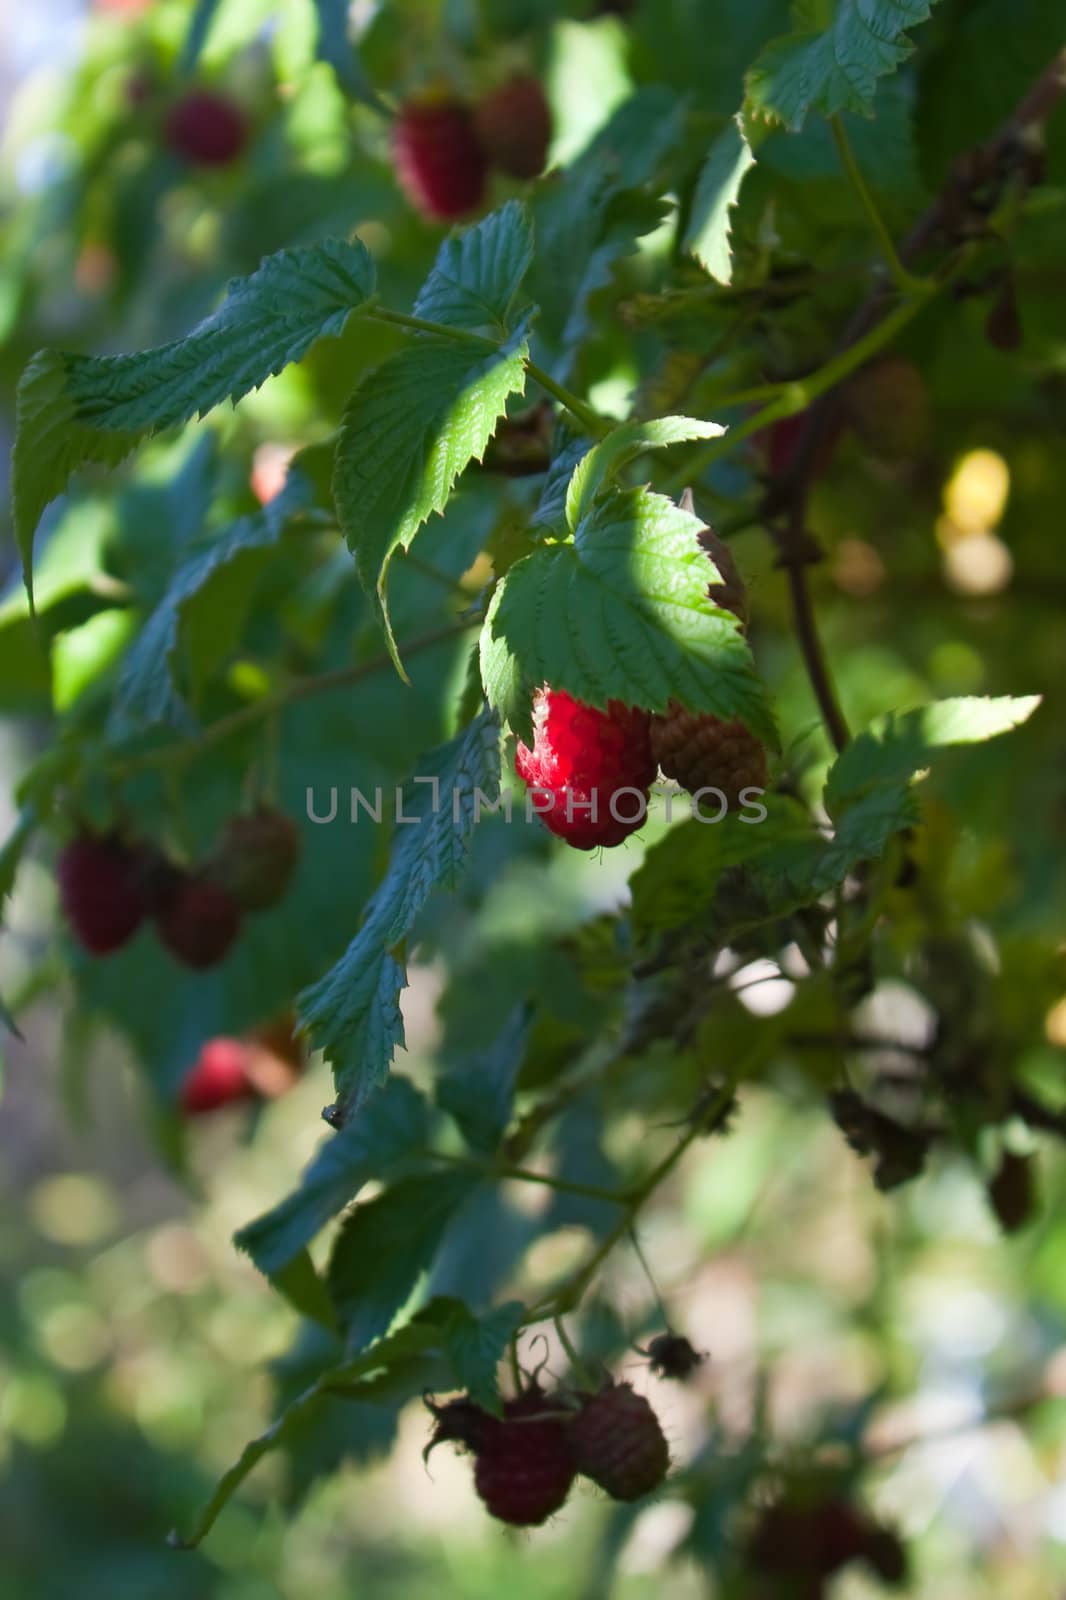 Green raspberry-bush with ripe red juicy berries